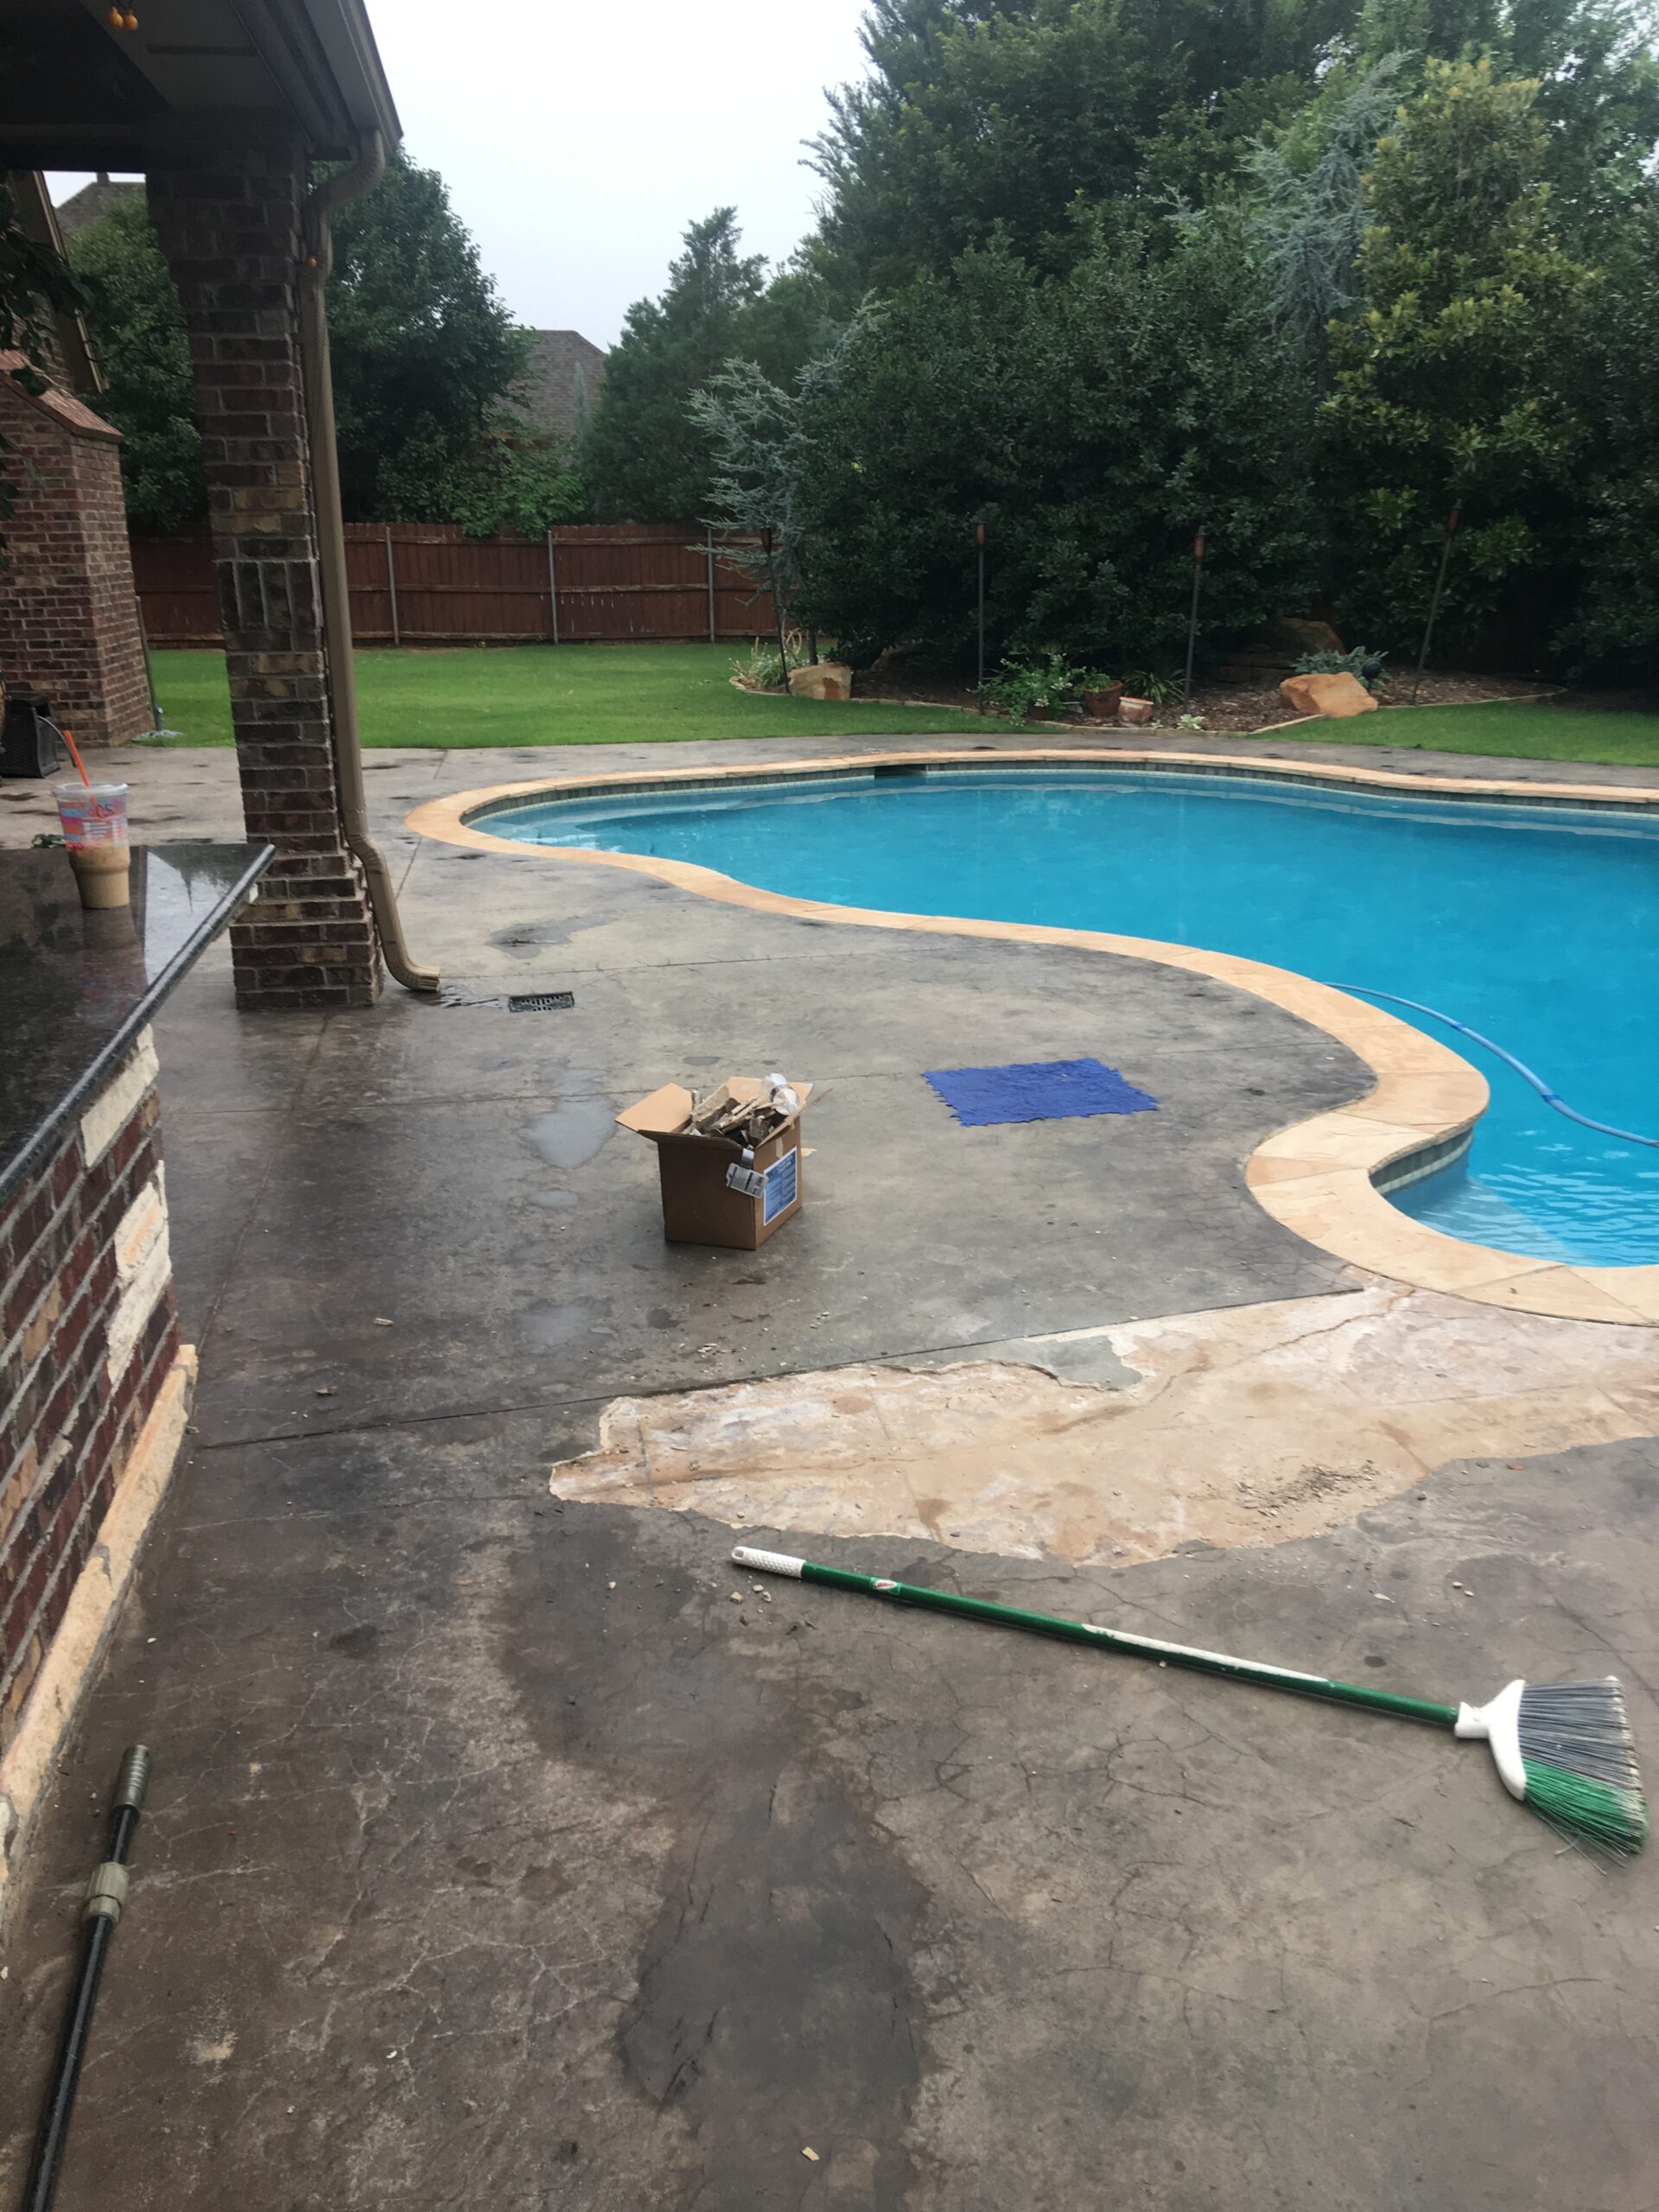 Damaged, peeling concrete pool deck prior to restoration